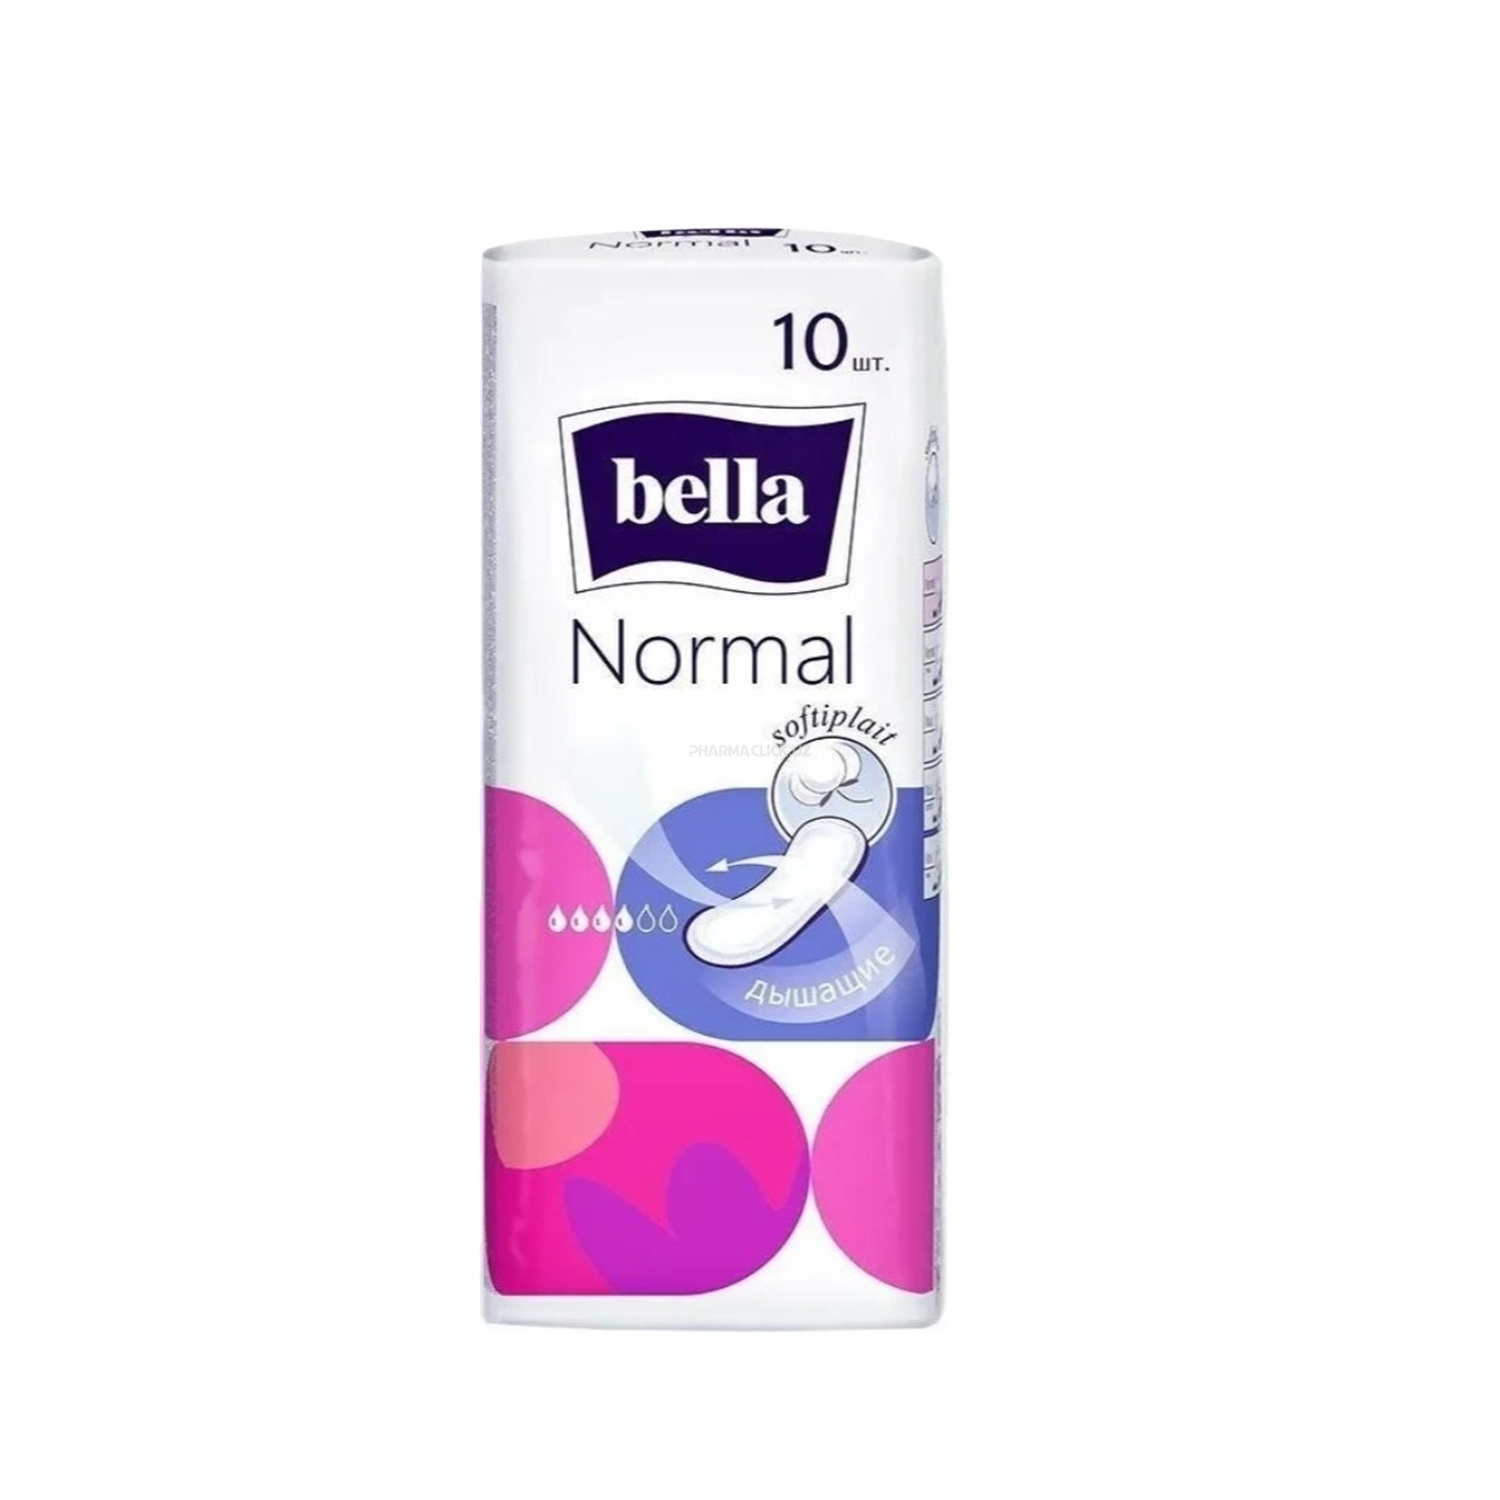 "Bella NORMAL" prokladkalari 10 dona